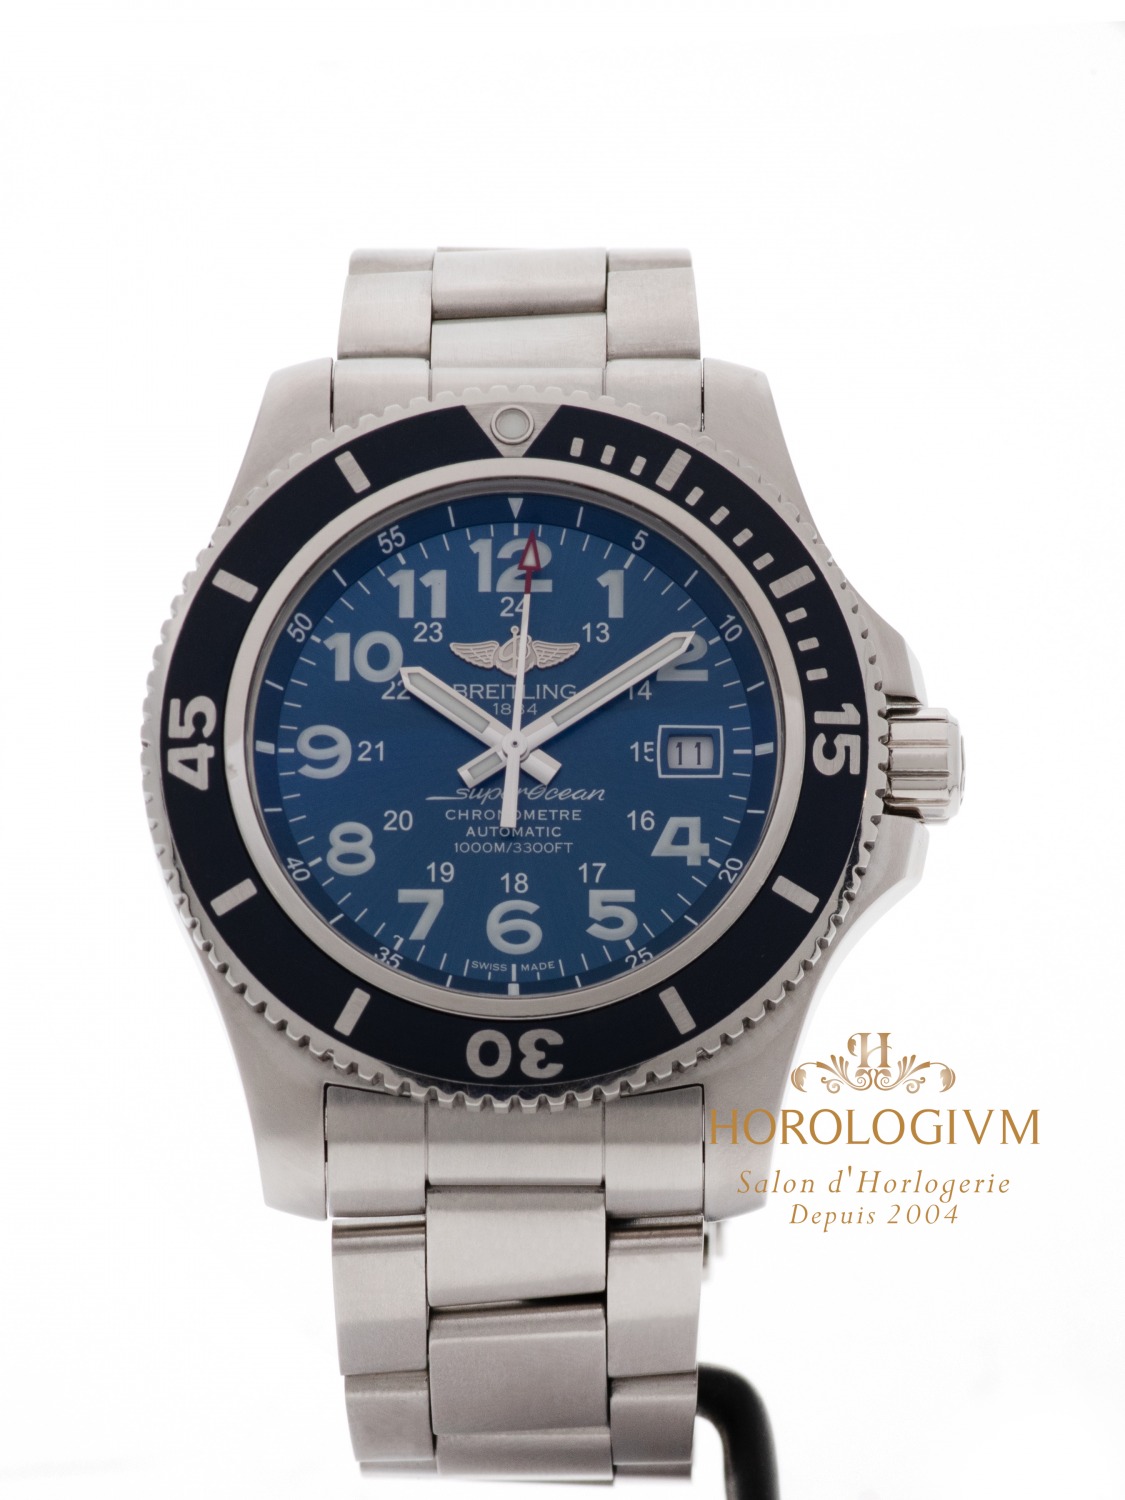 Breitling SuperOcean II 44MM Ref. A17392, watch, silver (case) and silver & blue (bezel)